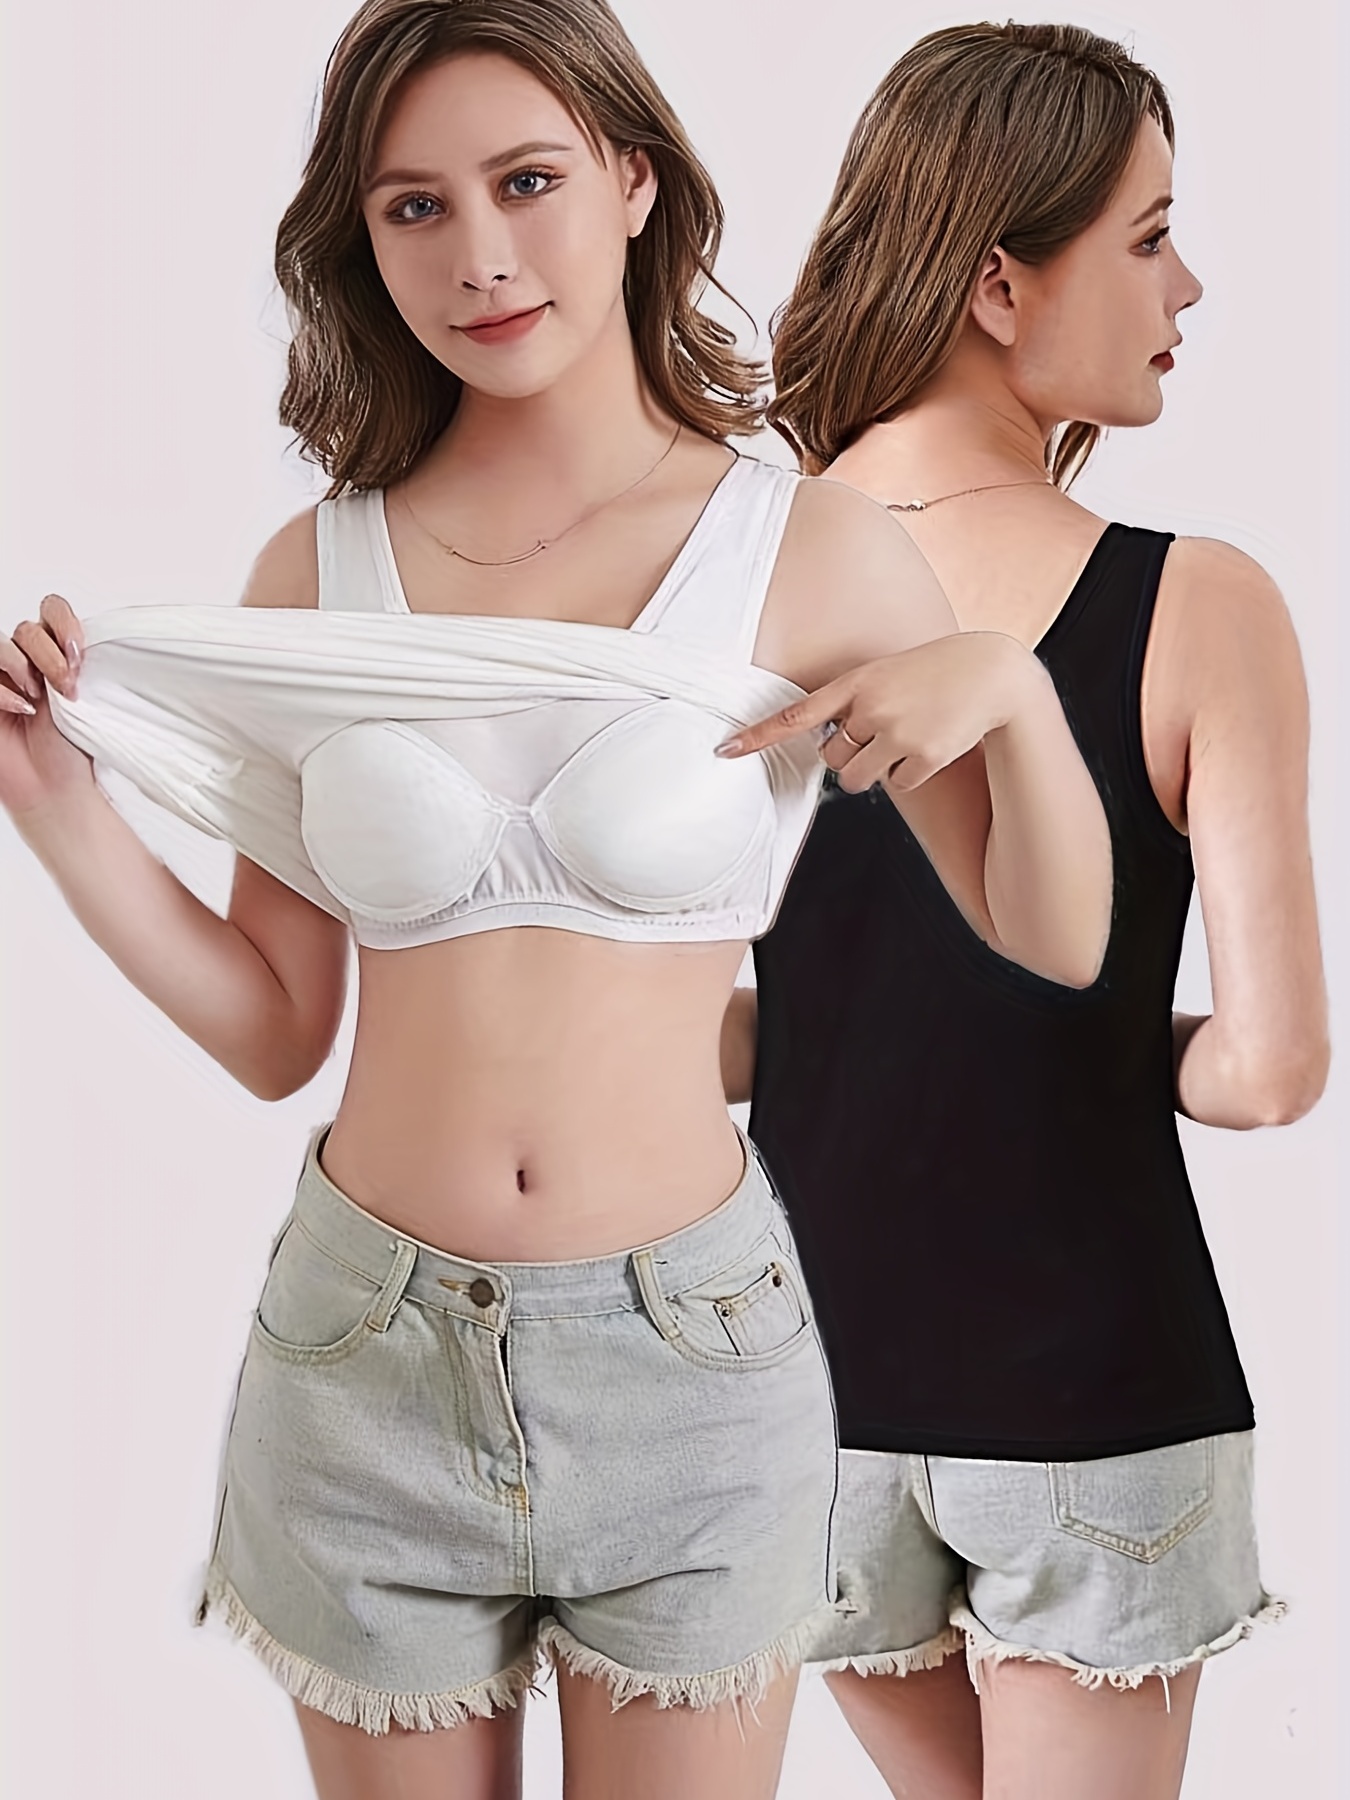 SZXZYGS Underoutfit Bras for Women Women's Comfortable Tank Top